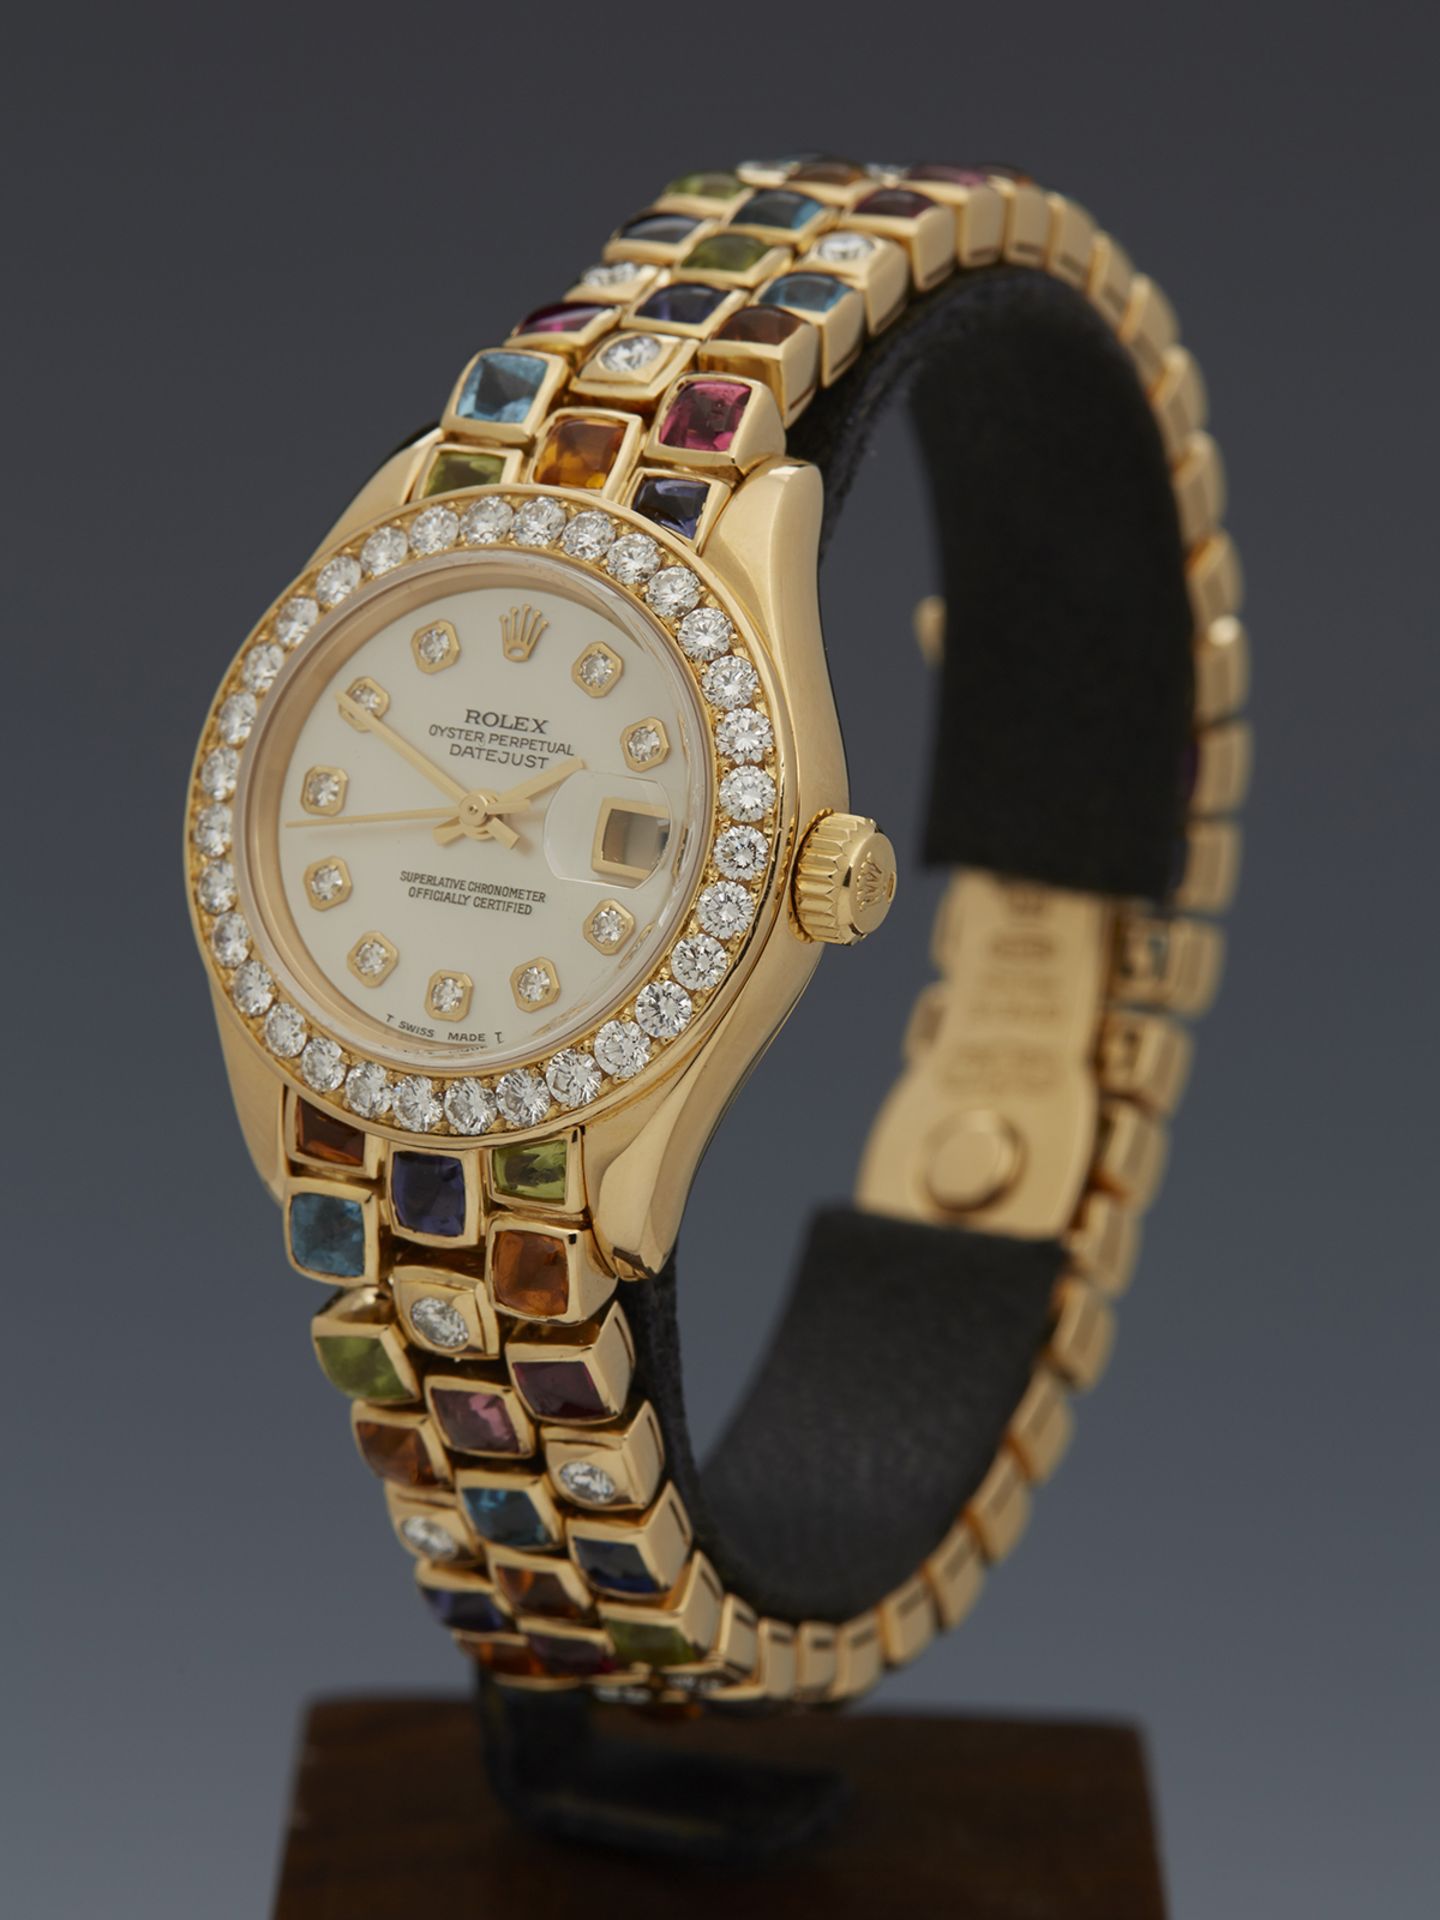 Rolex, Pearlmaster 69298 Diamonds & Precious Gems Limited Edition for the Dubai Royal Family